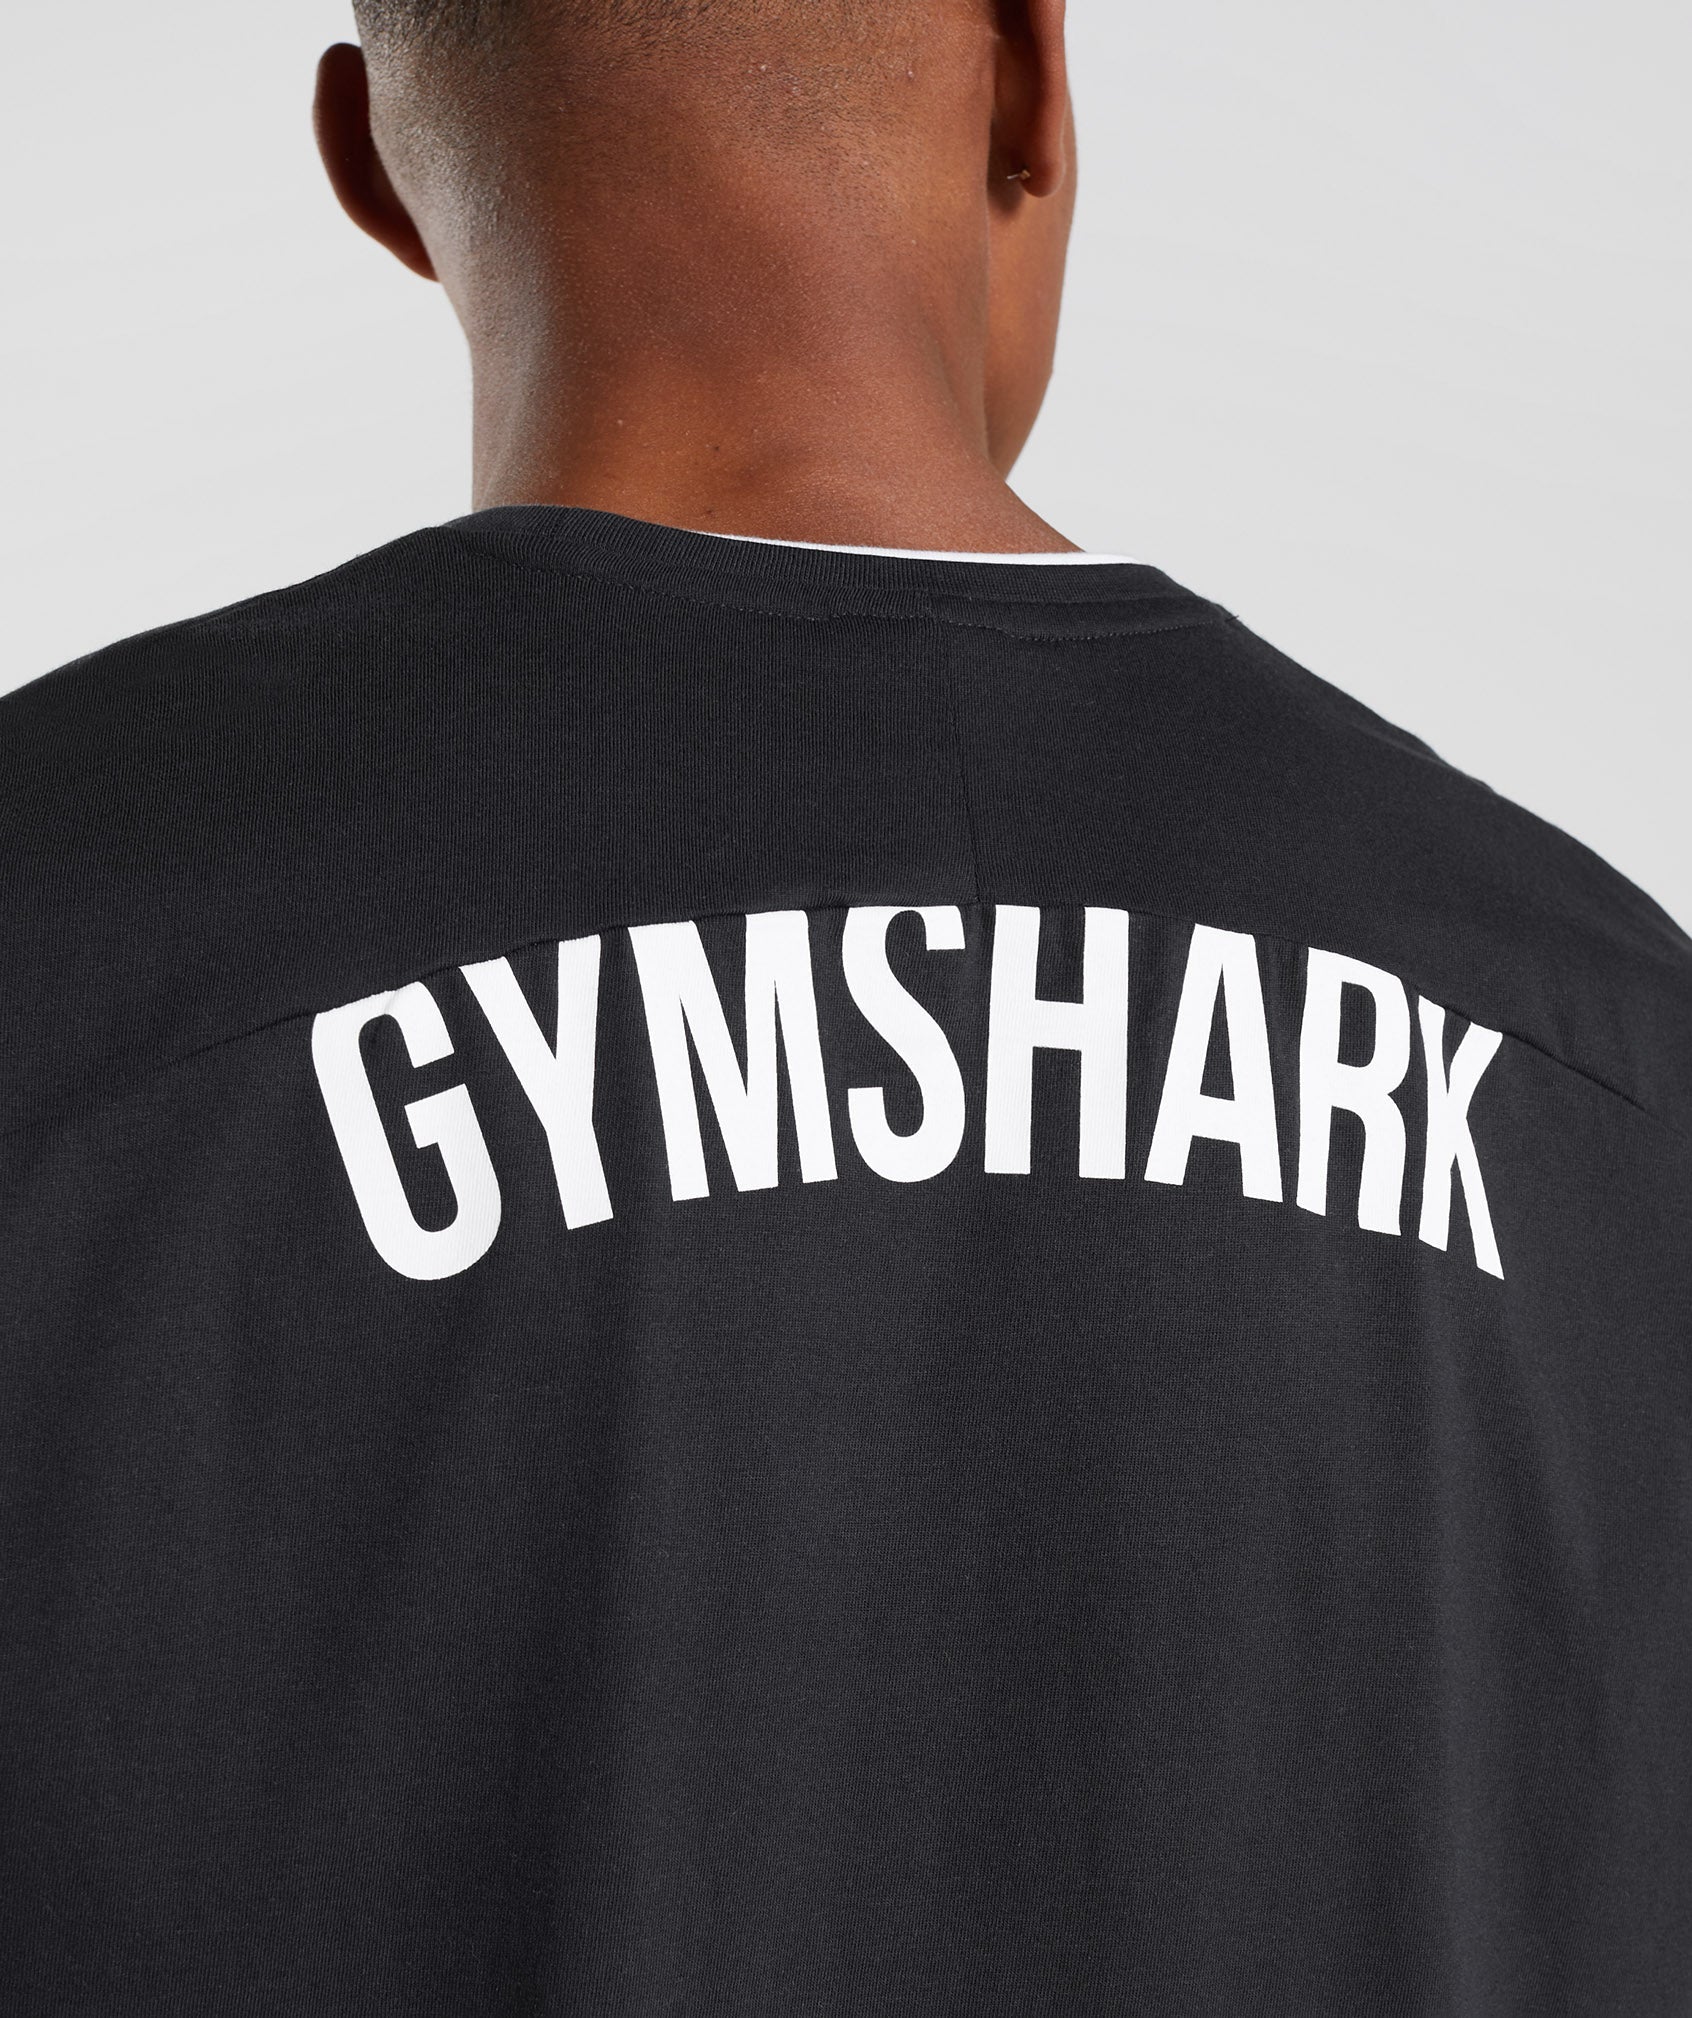 Gymshark Recess T-Shirt - White/Black